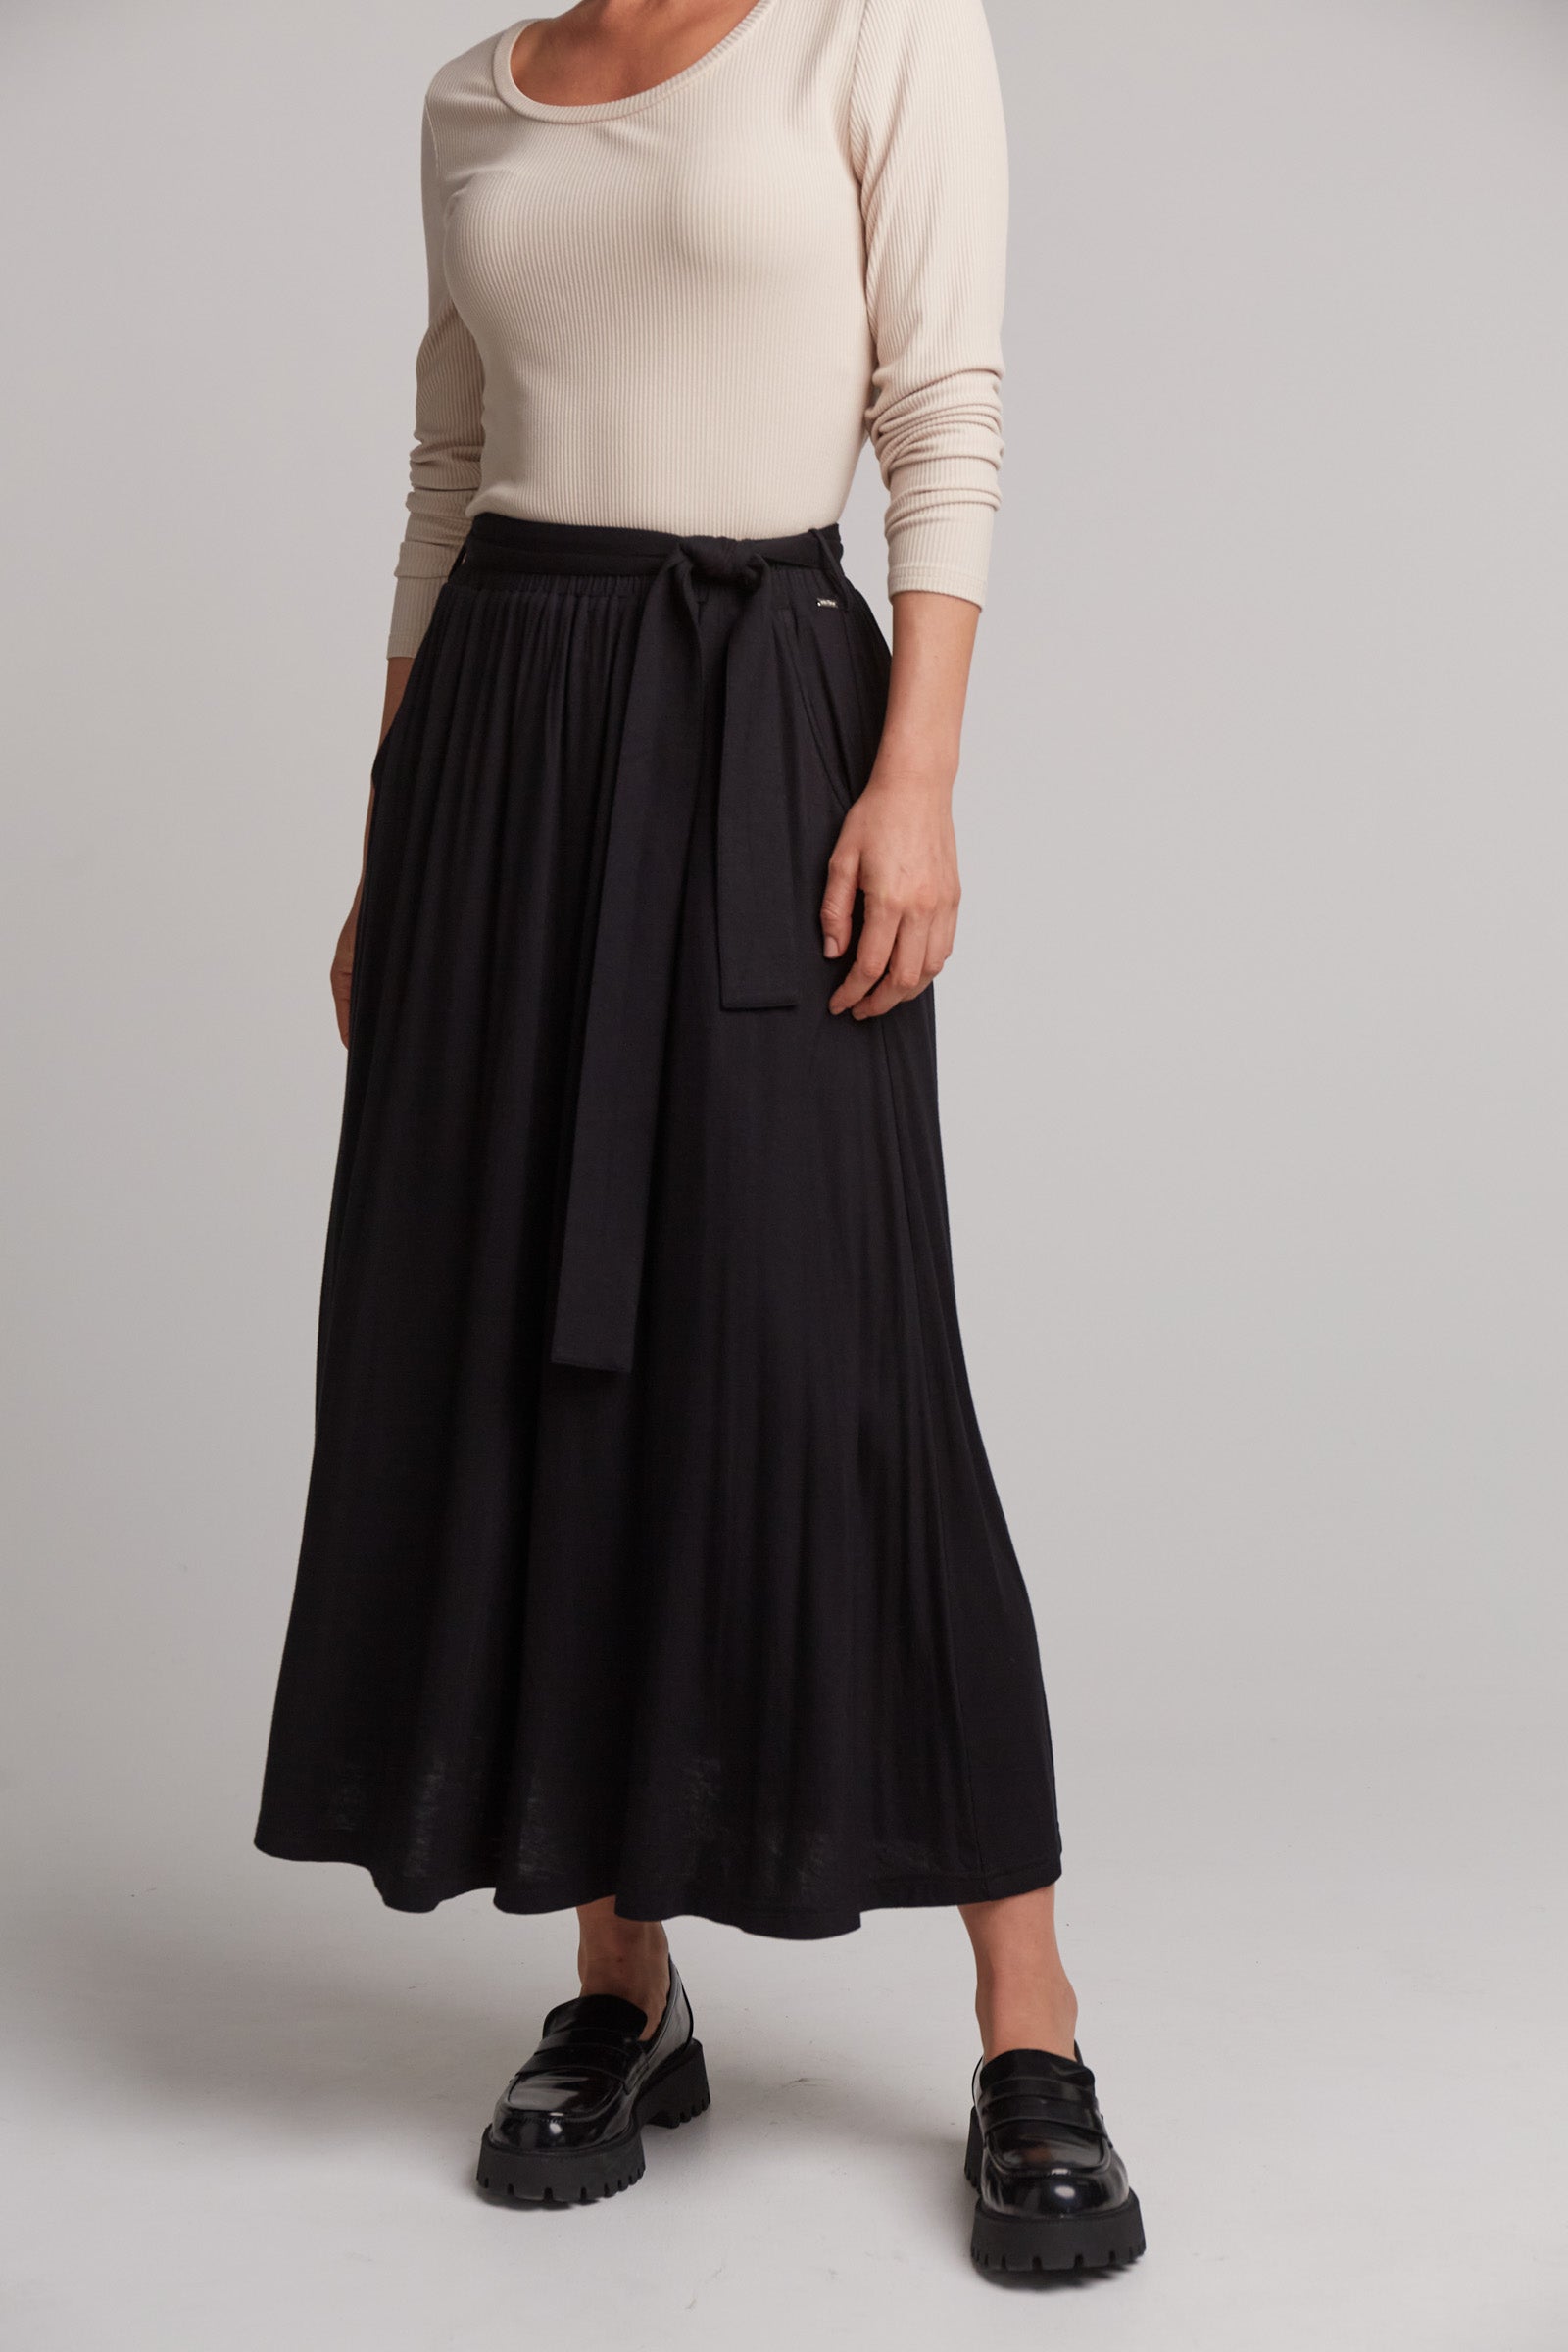 Studio Jersey Tie Skirt - Ebony - eb&ive Clothing - Skirt Maxi